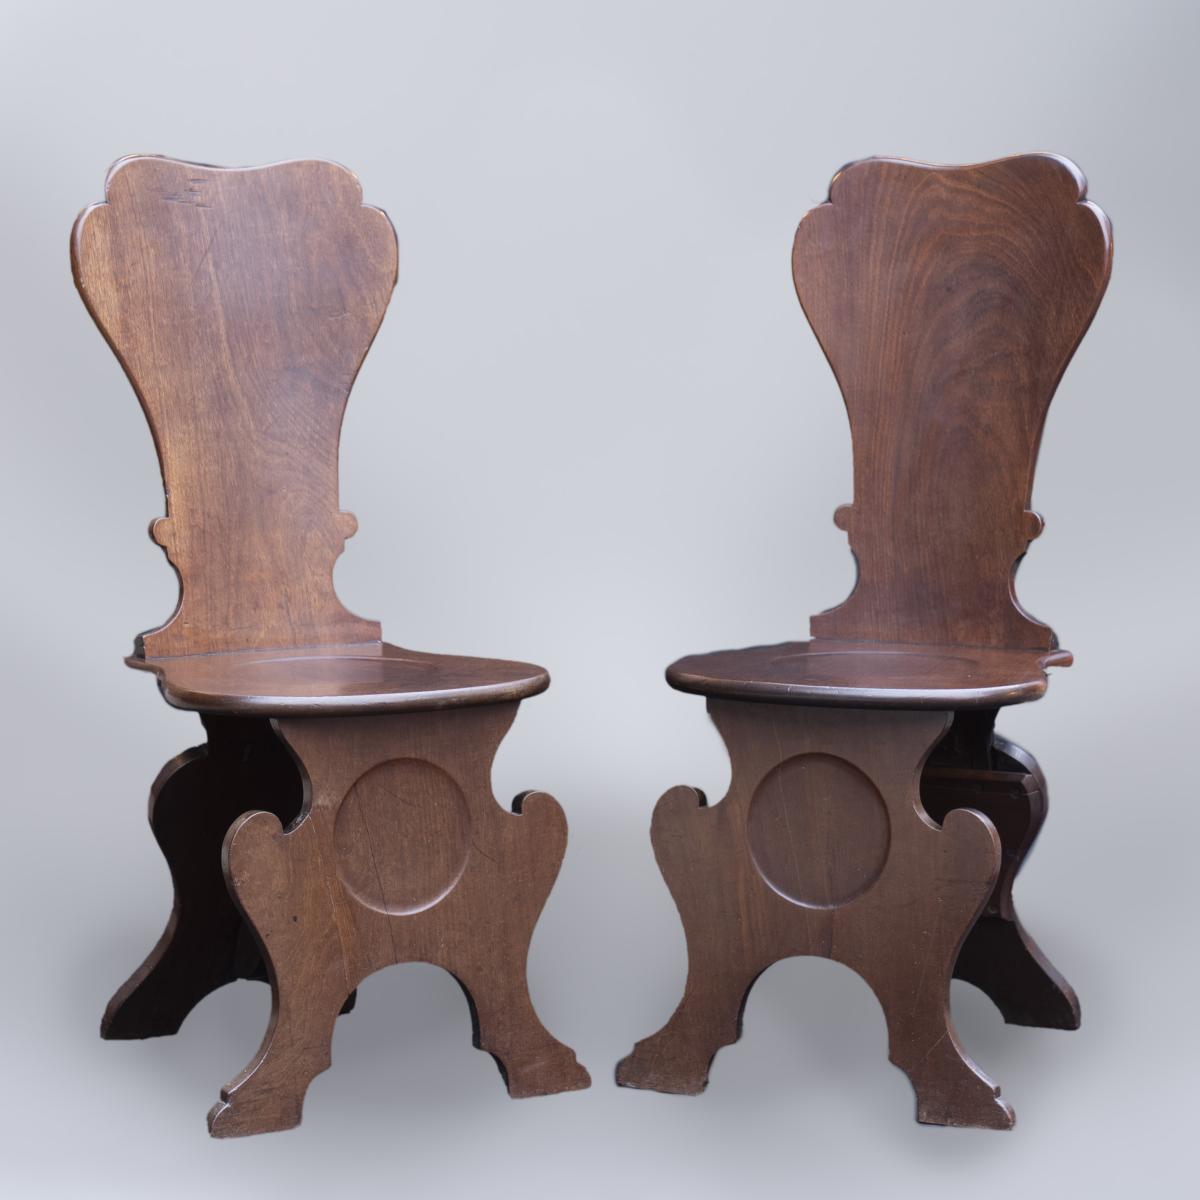 A Pair of George II Mahogany Hall Chairs (1740-1760)